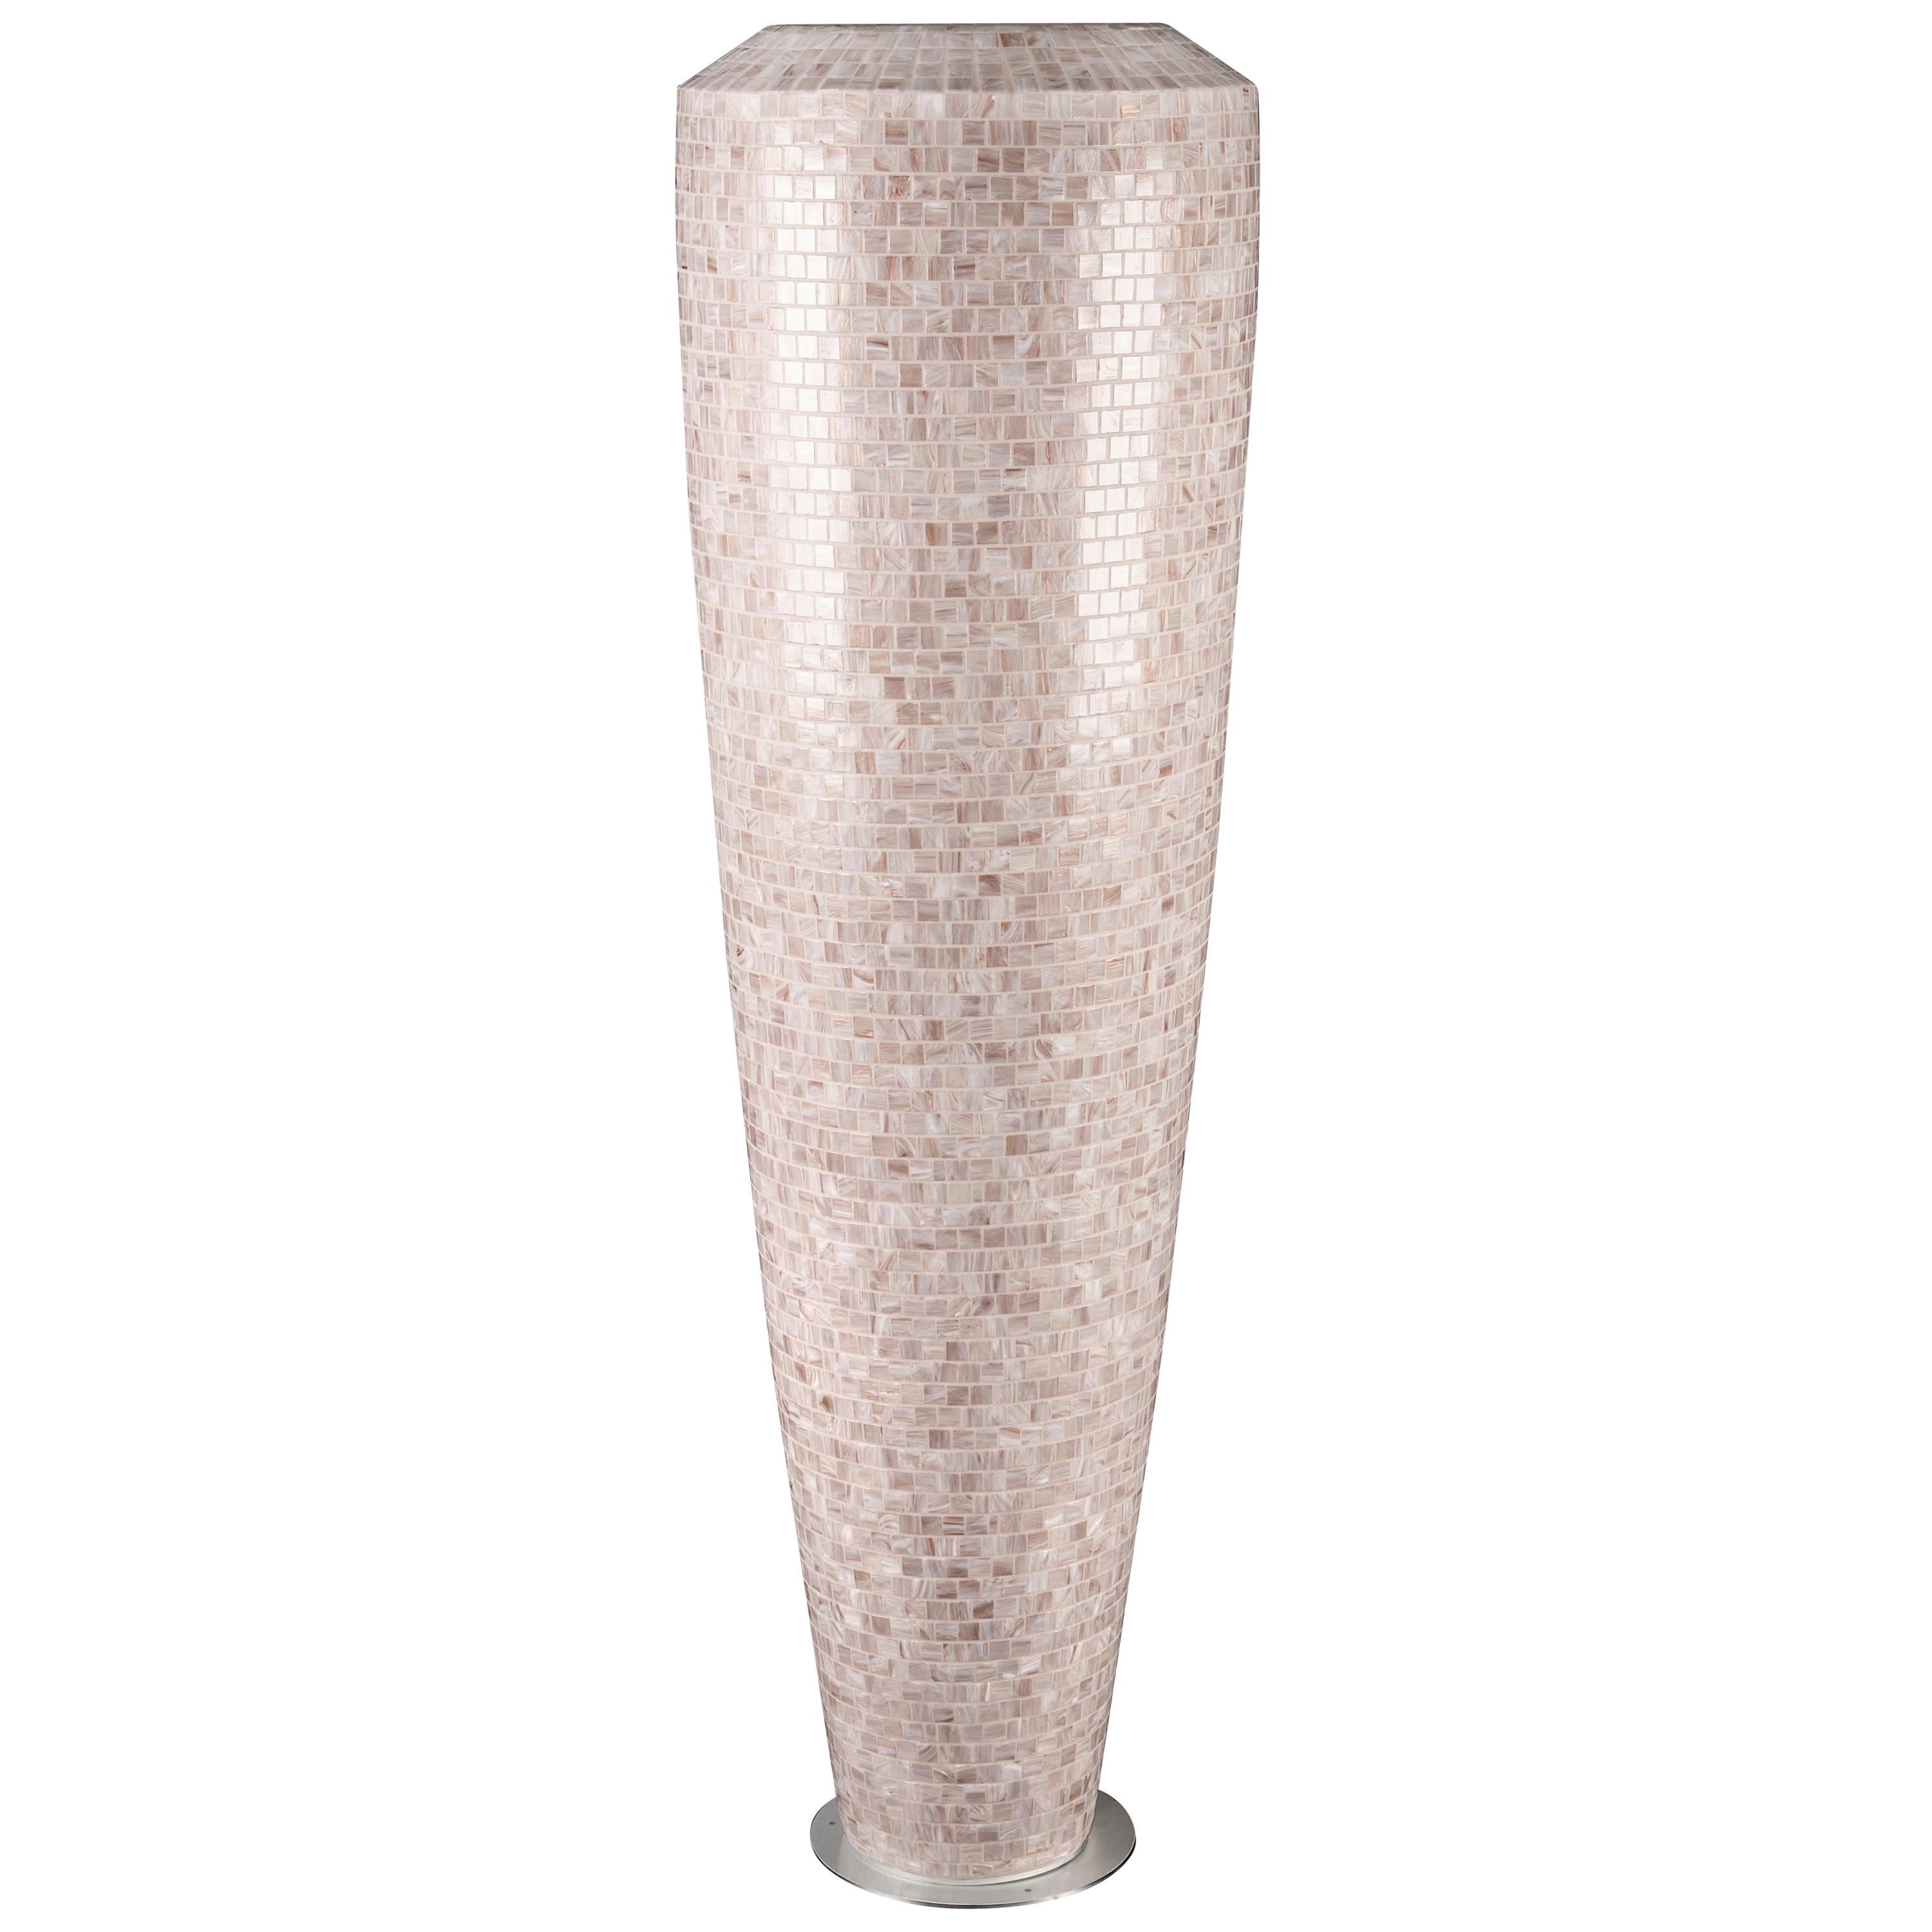 Obice Big Vase, LDPE, Indoor, Bisazza Mosaic, Italy For Sale